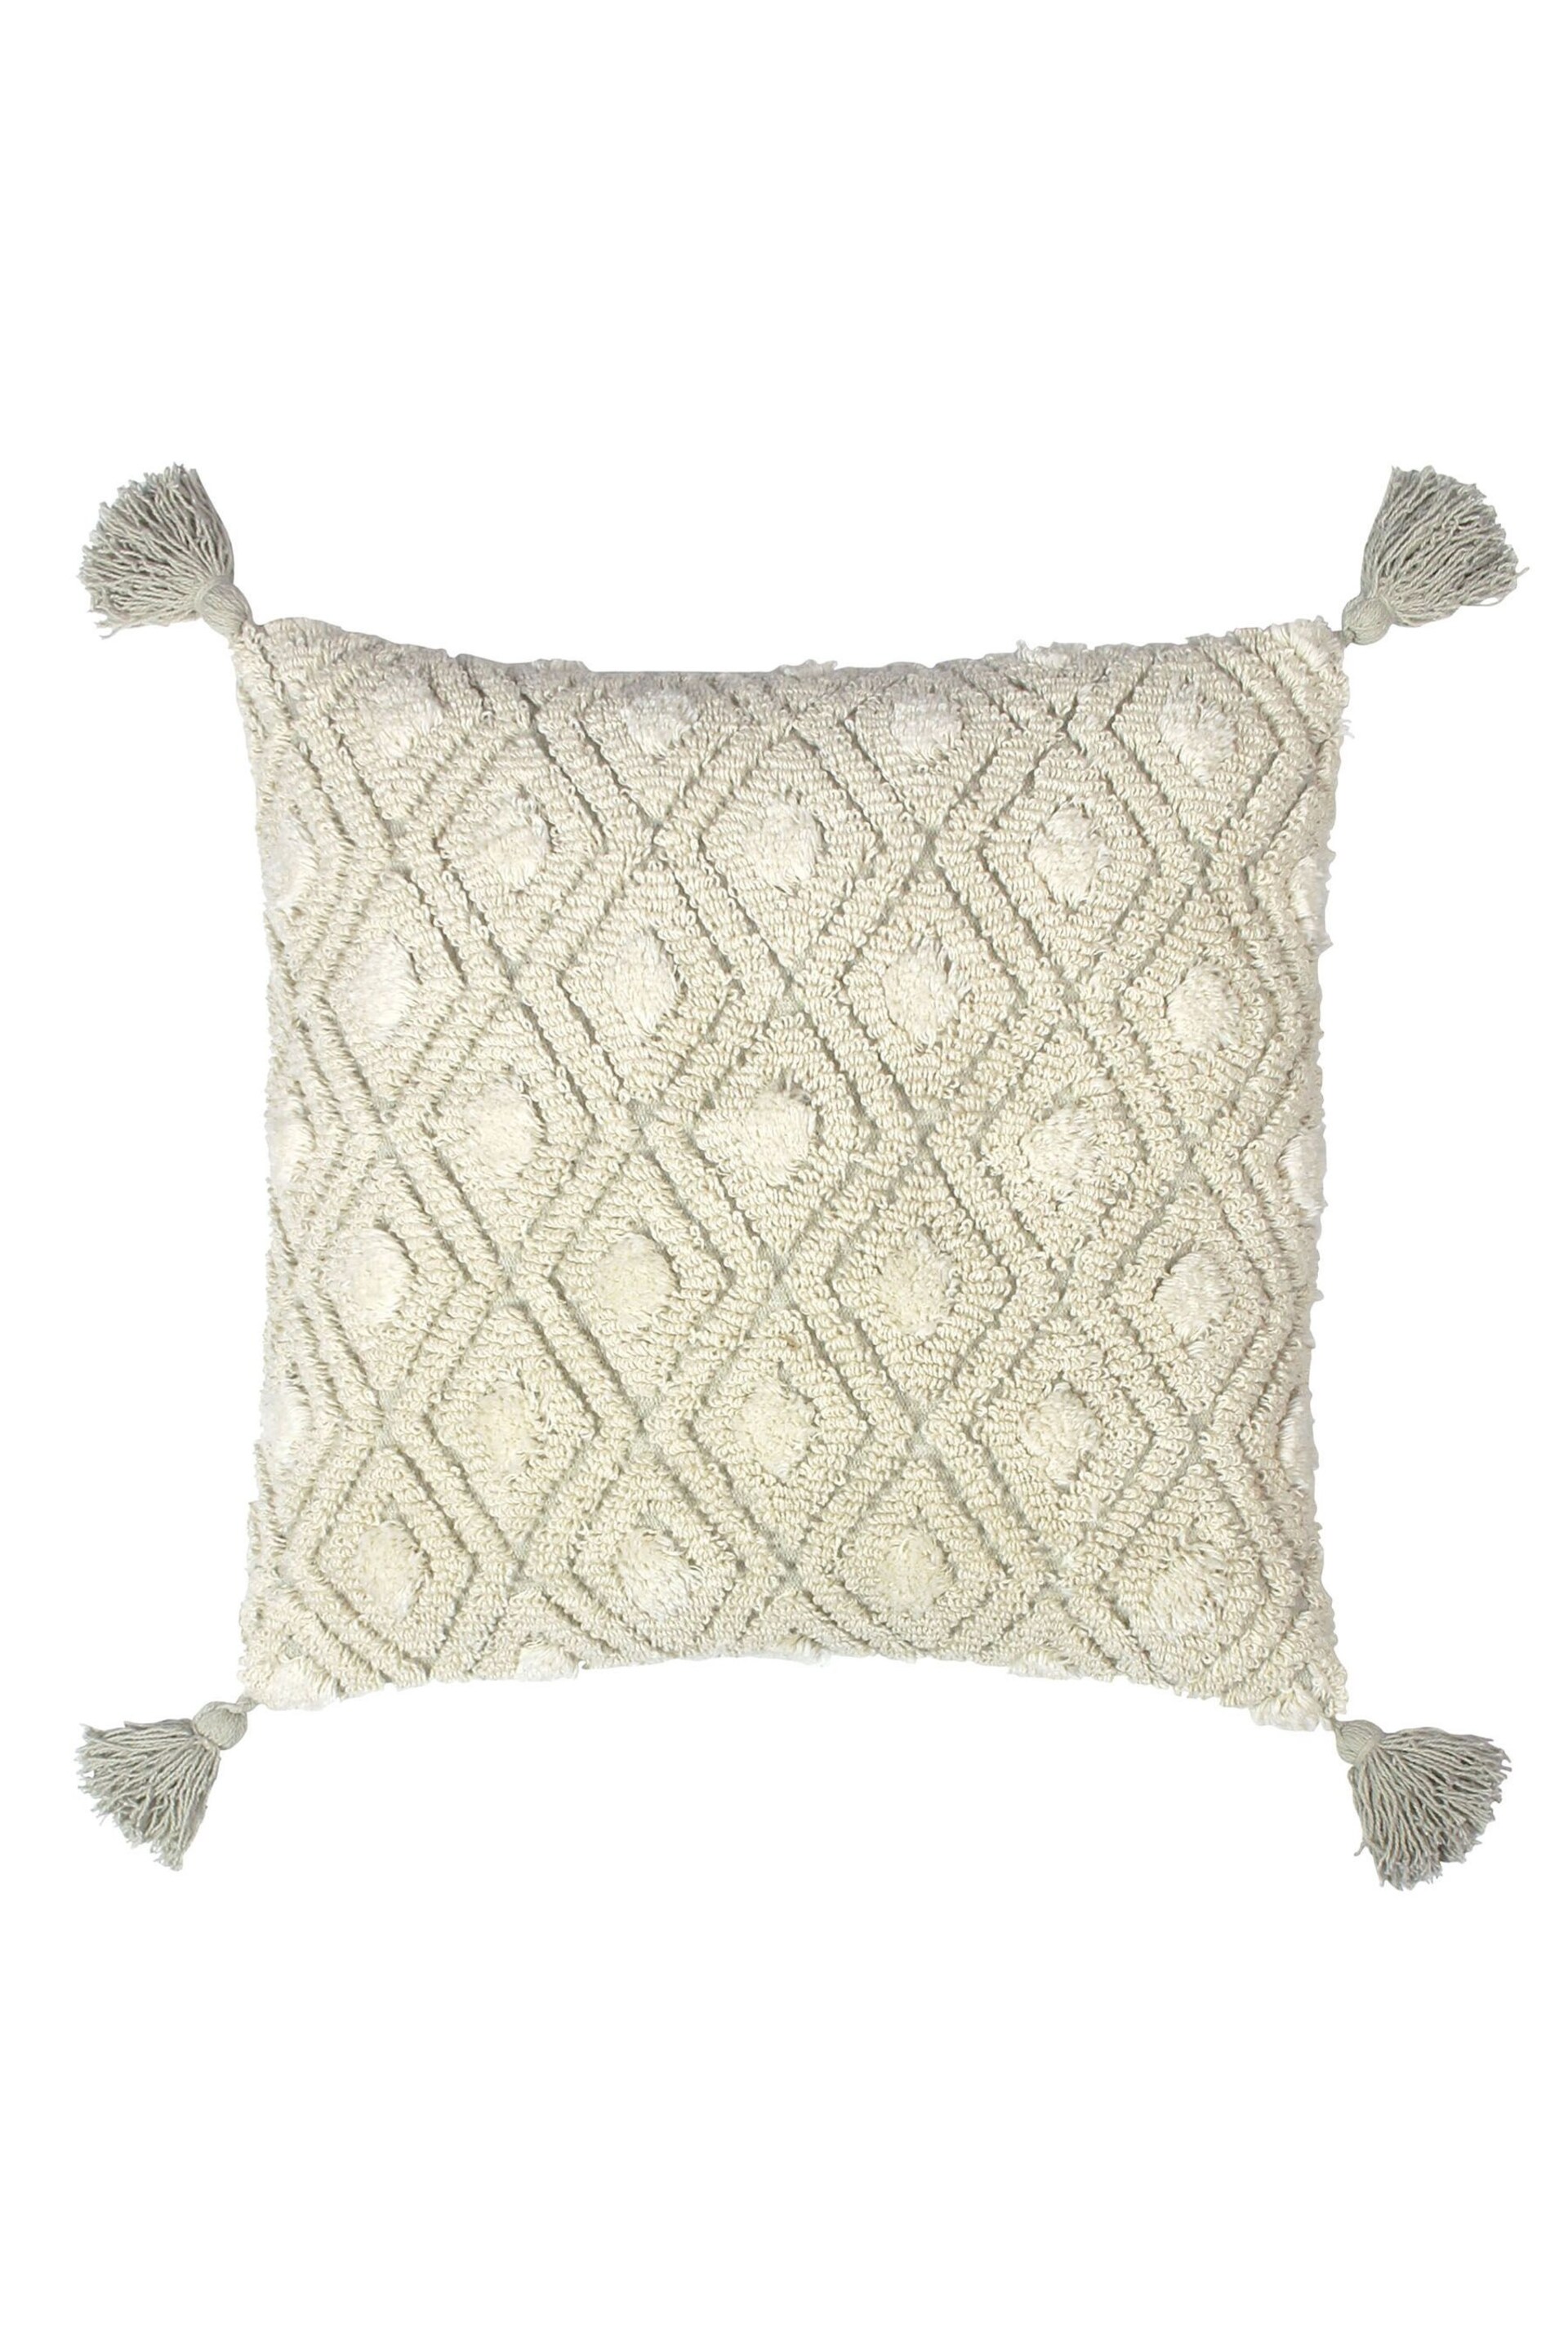 furn. Natural/Taupe Berbera Geometric Polyester Filled Cushion - Image 1 of 3